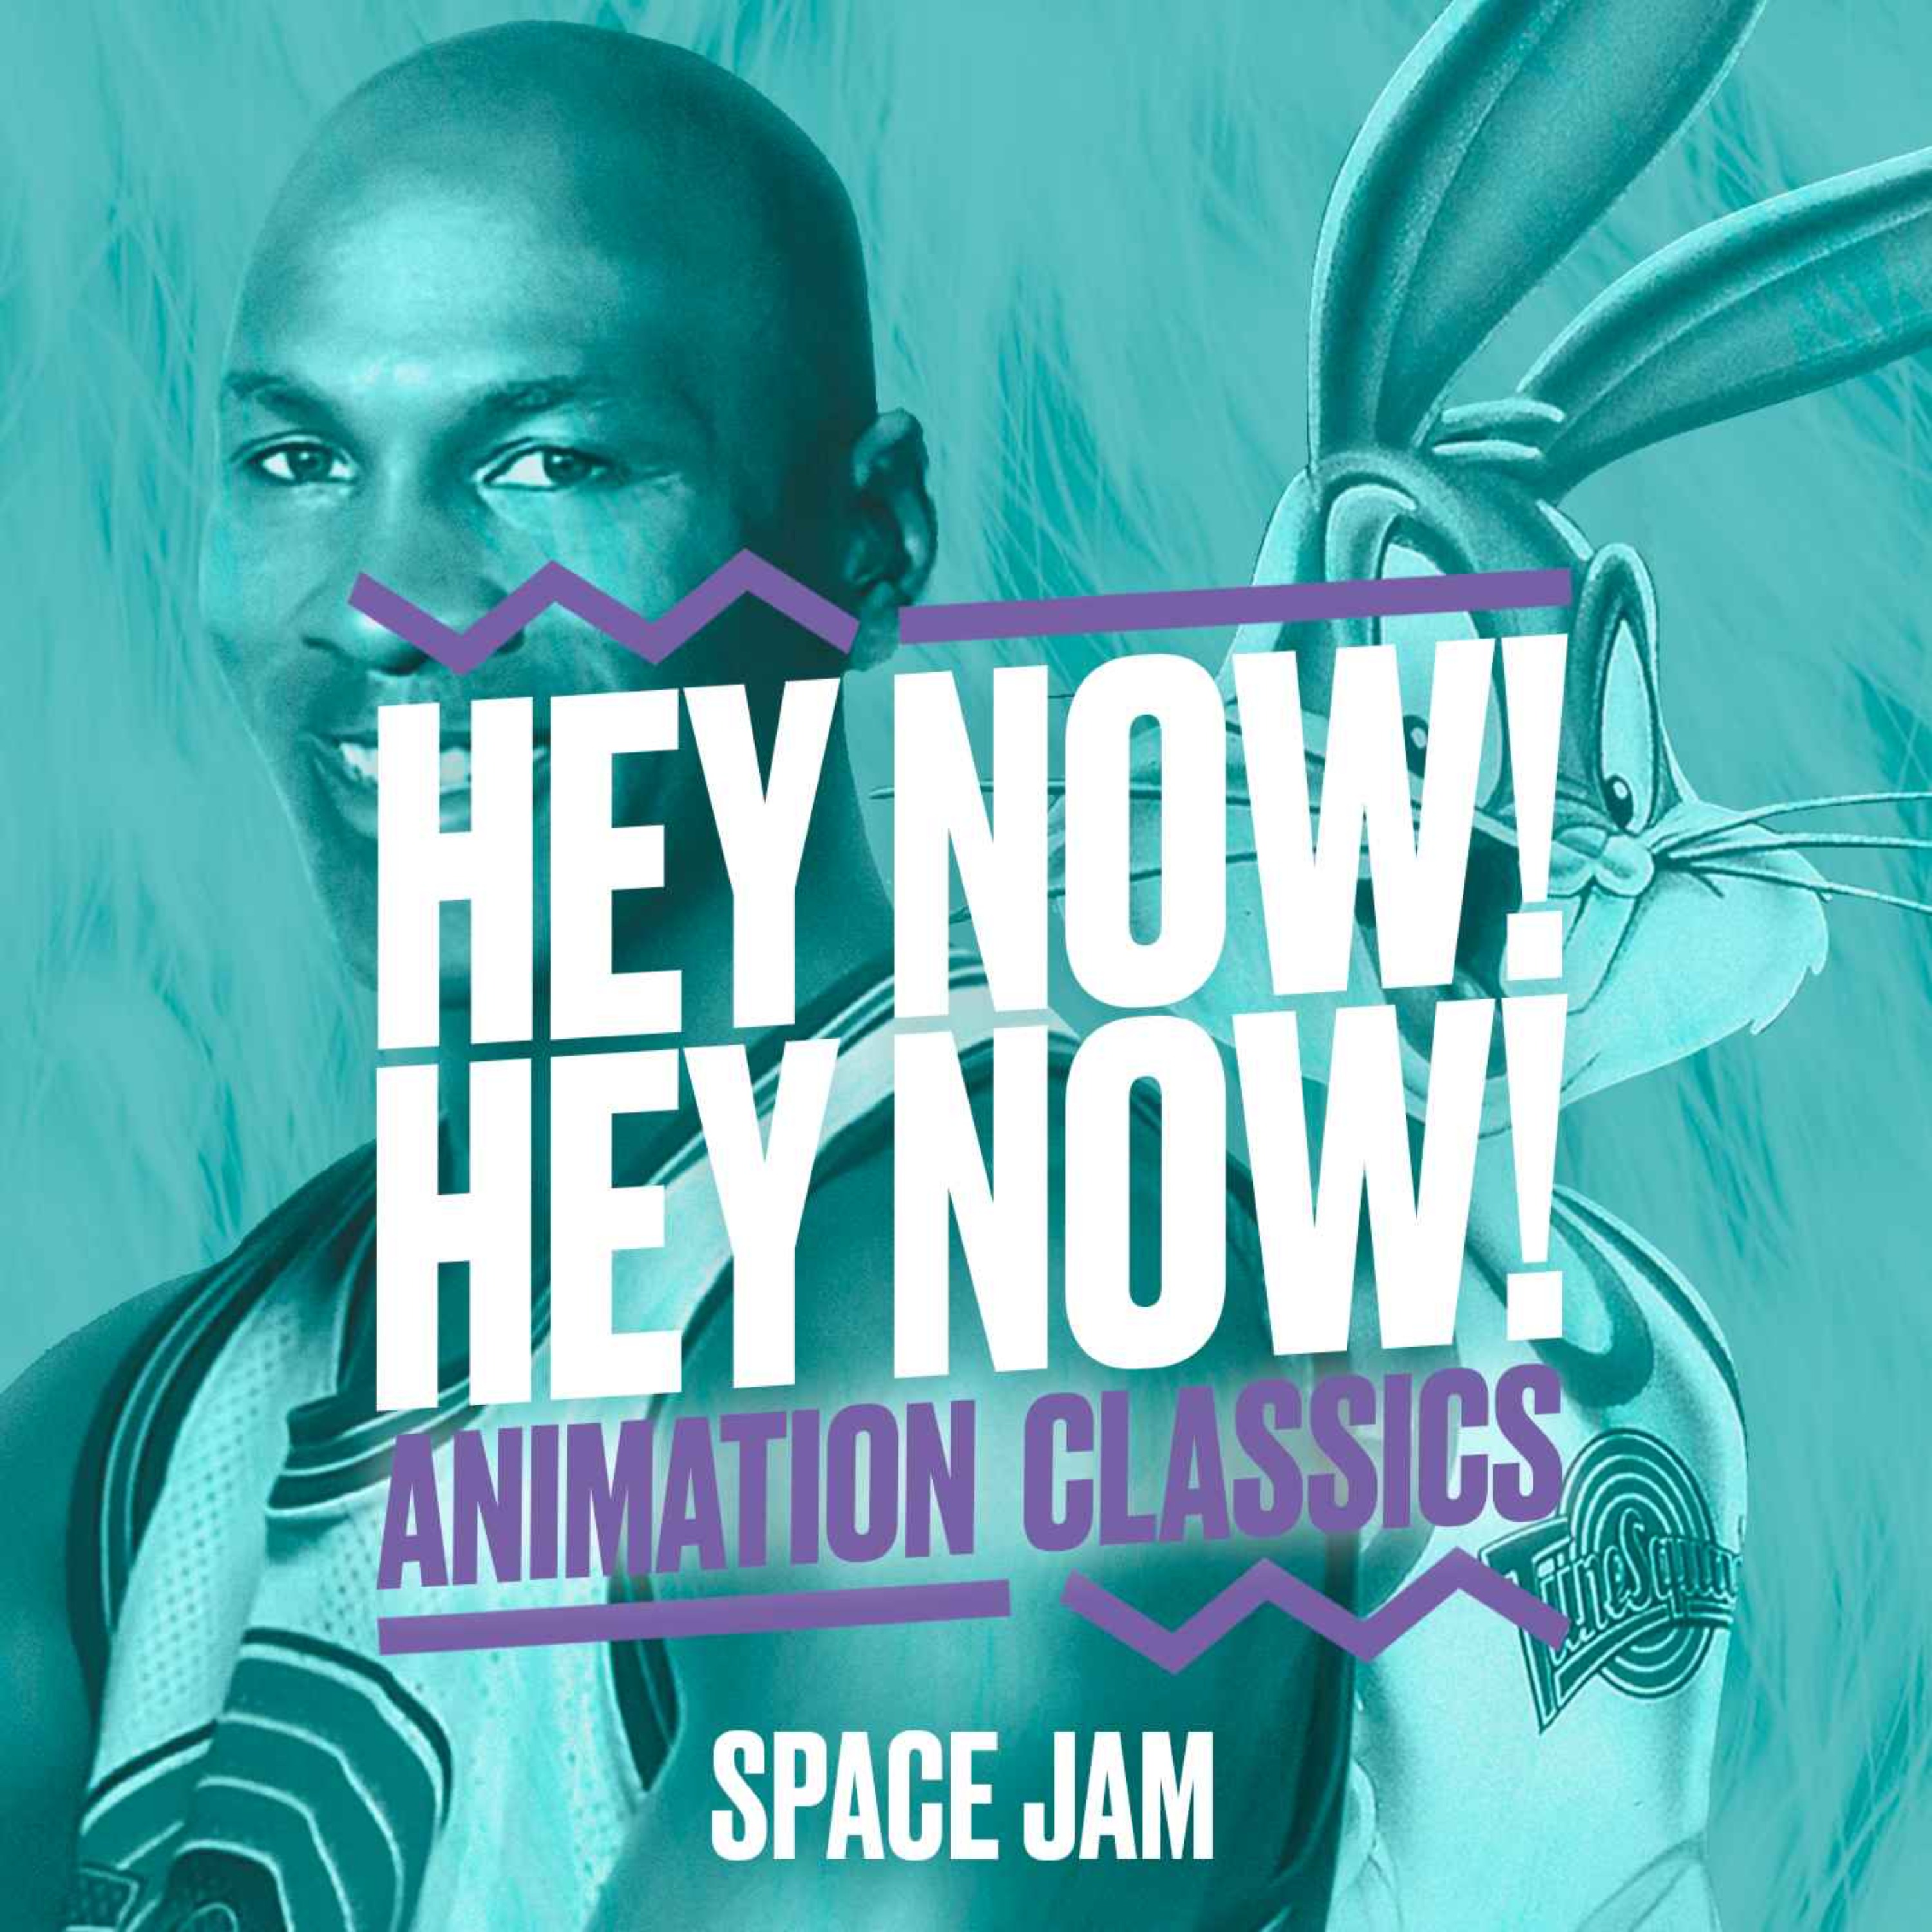 Animation Classics: Space Jam